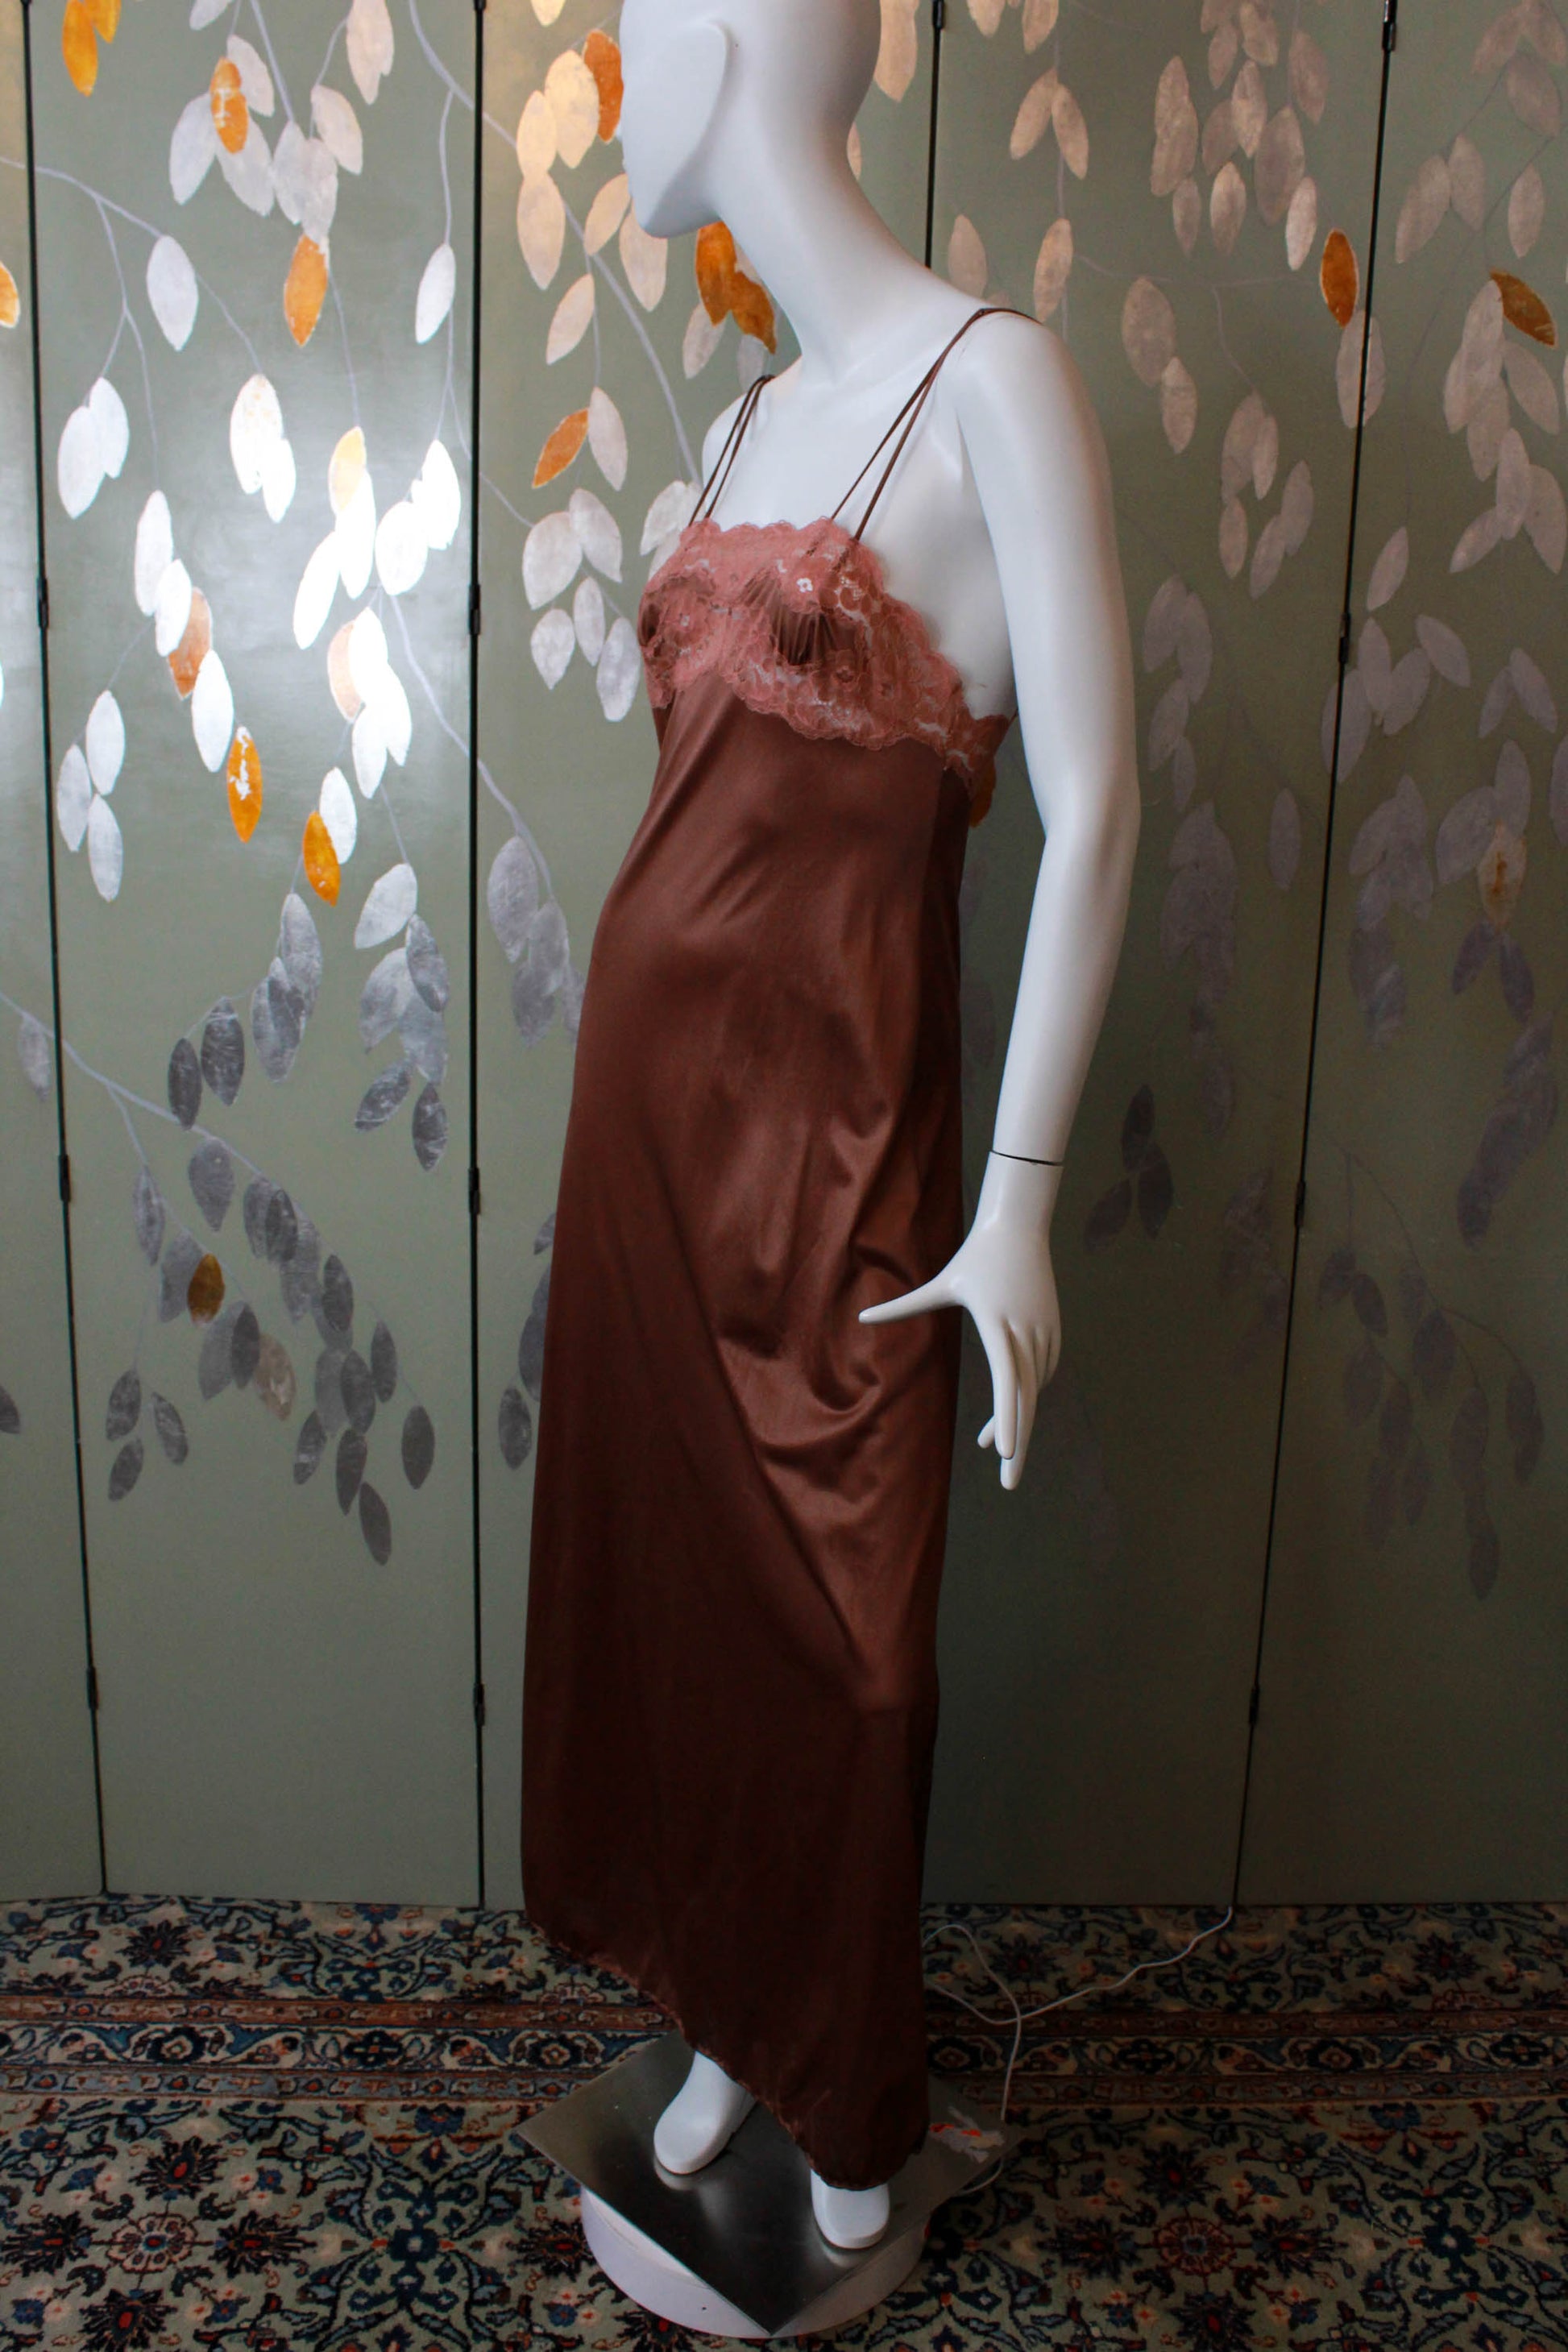 1980s soft brown slip dress maxi length spaghetti straps lace trim